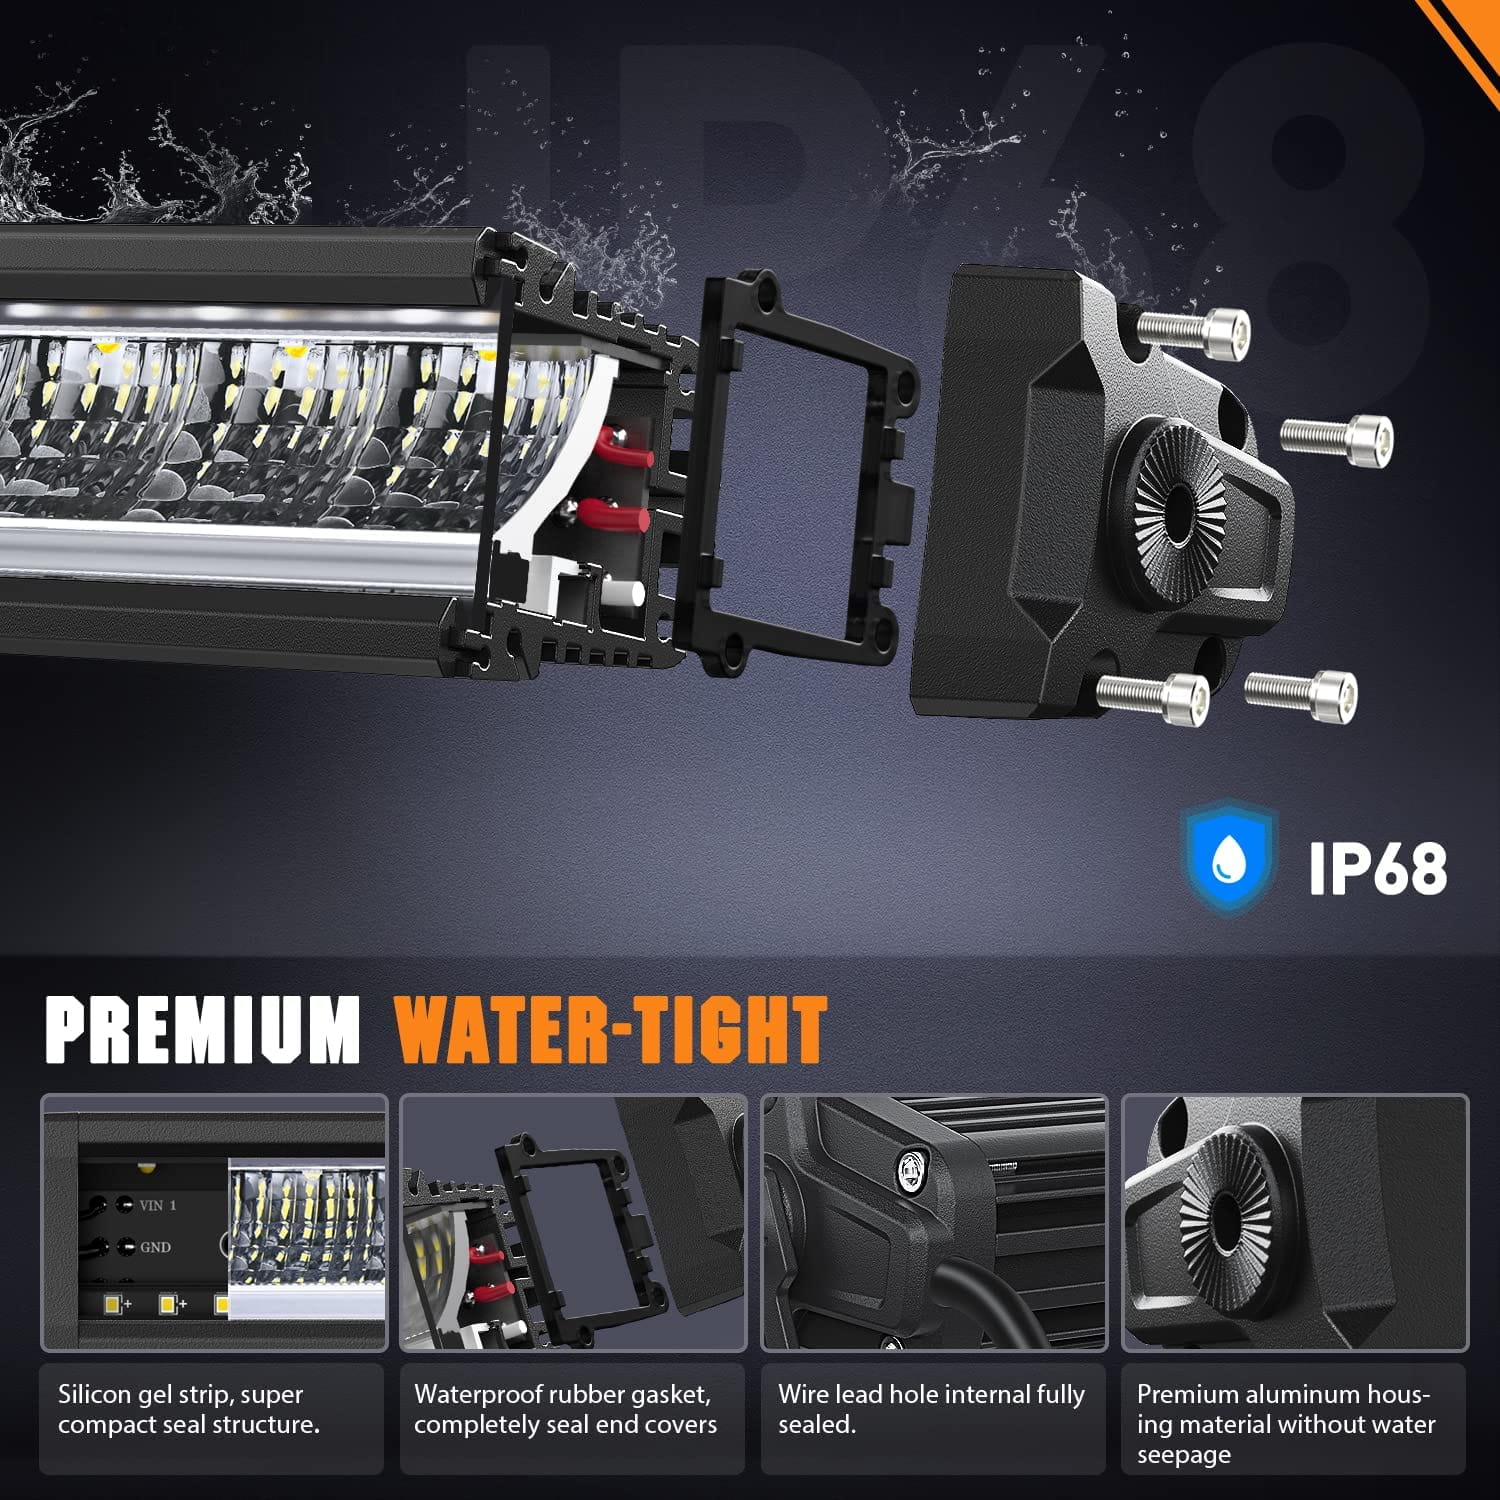 12.2" 45W 4980LM Anti-Glare Slim Spot/Flood LED Light Bar (Pair) | 16AWG DT Wire Nilight